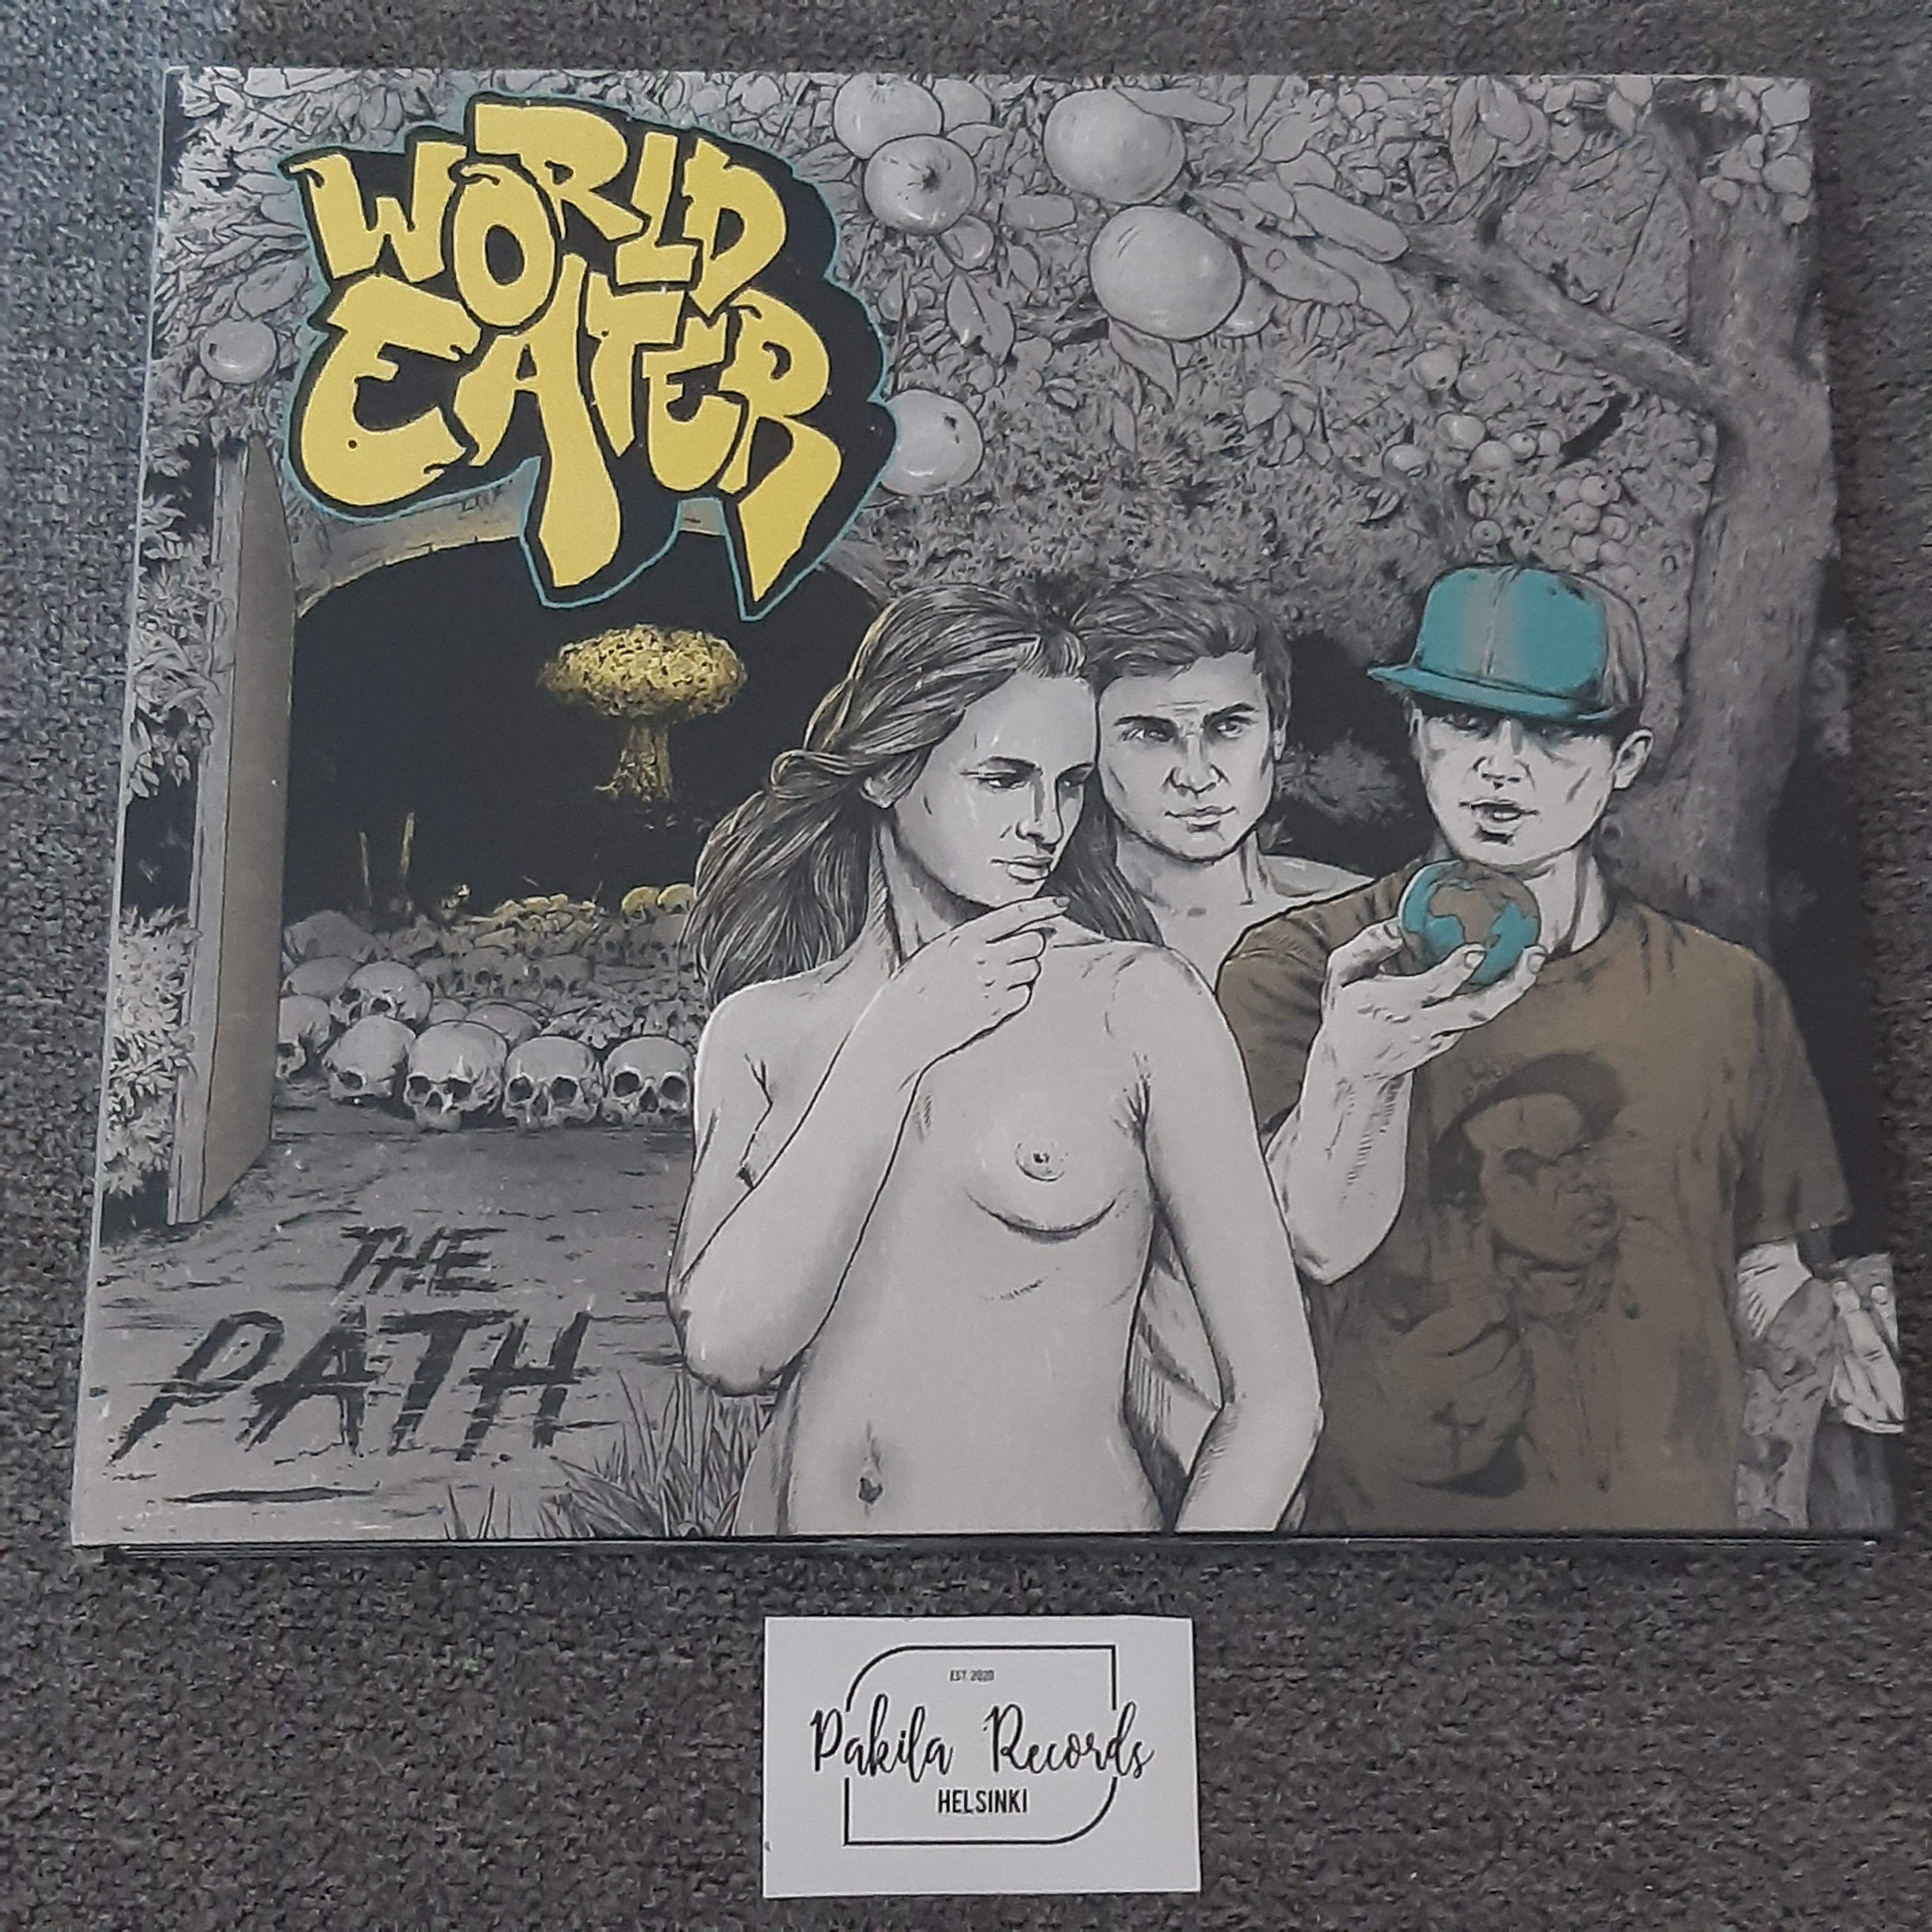 World Eater - The Path - CD (käytetty)